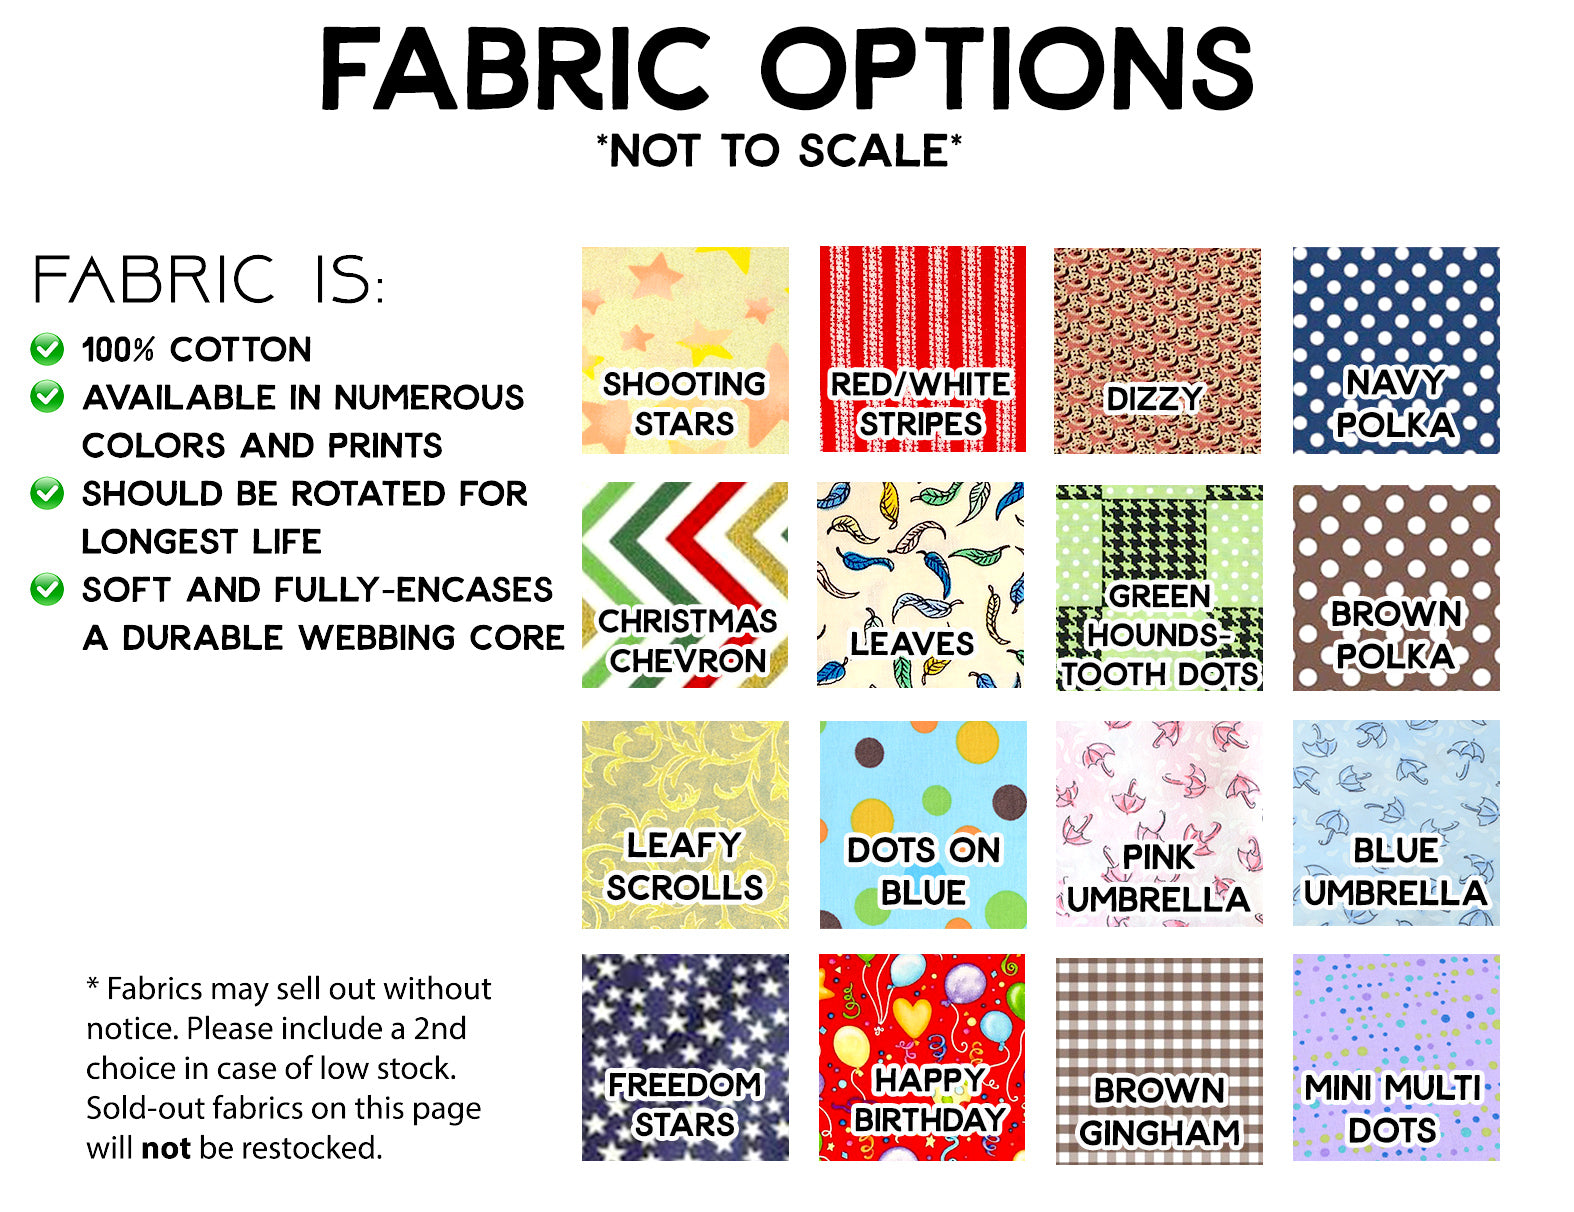 fabric print options